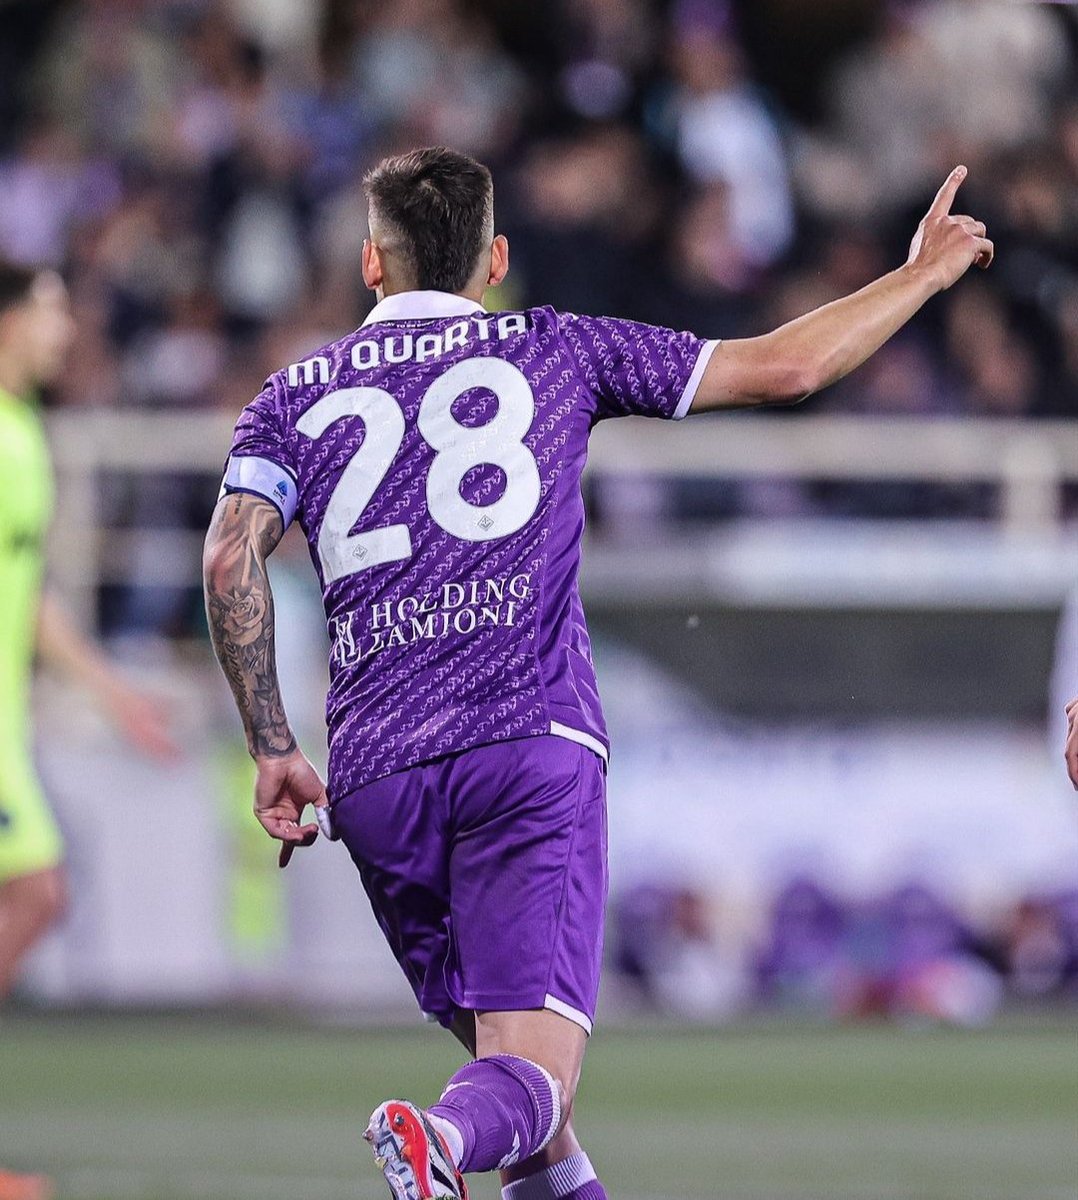 #SerieA
FT : Fiorentina 5-1 Sassuolo

⚽ Riccardo Sottil 17'
⚽ Lucas Martinez Quarta 54'
⚽ Nicolás González 58', 66'
⚽ Antonin Barak 62'
-
⚽ Kristian Thorstvedt 57'

Fiorentina bantai bantai wakkk dikandang sendiri